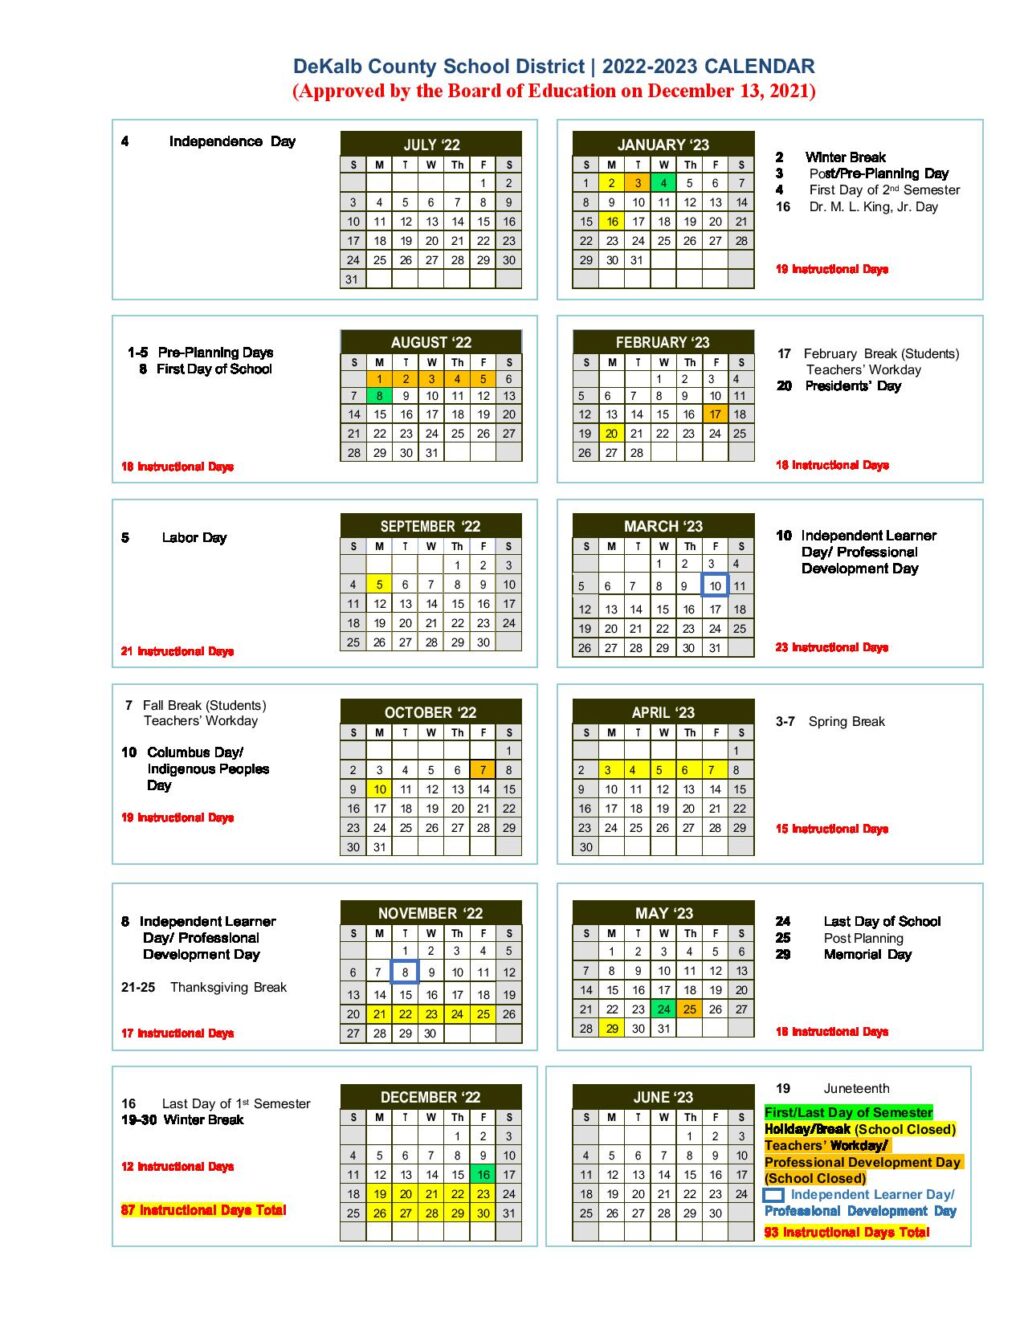 DeKalb County School District Calendar Holidays 20222023